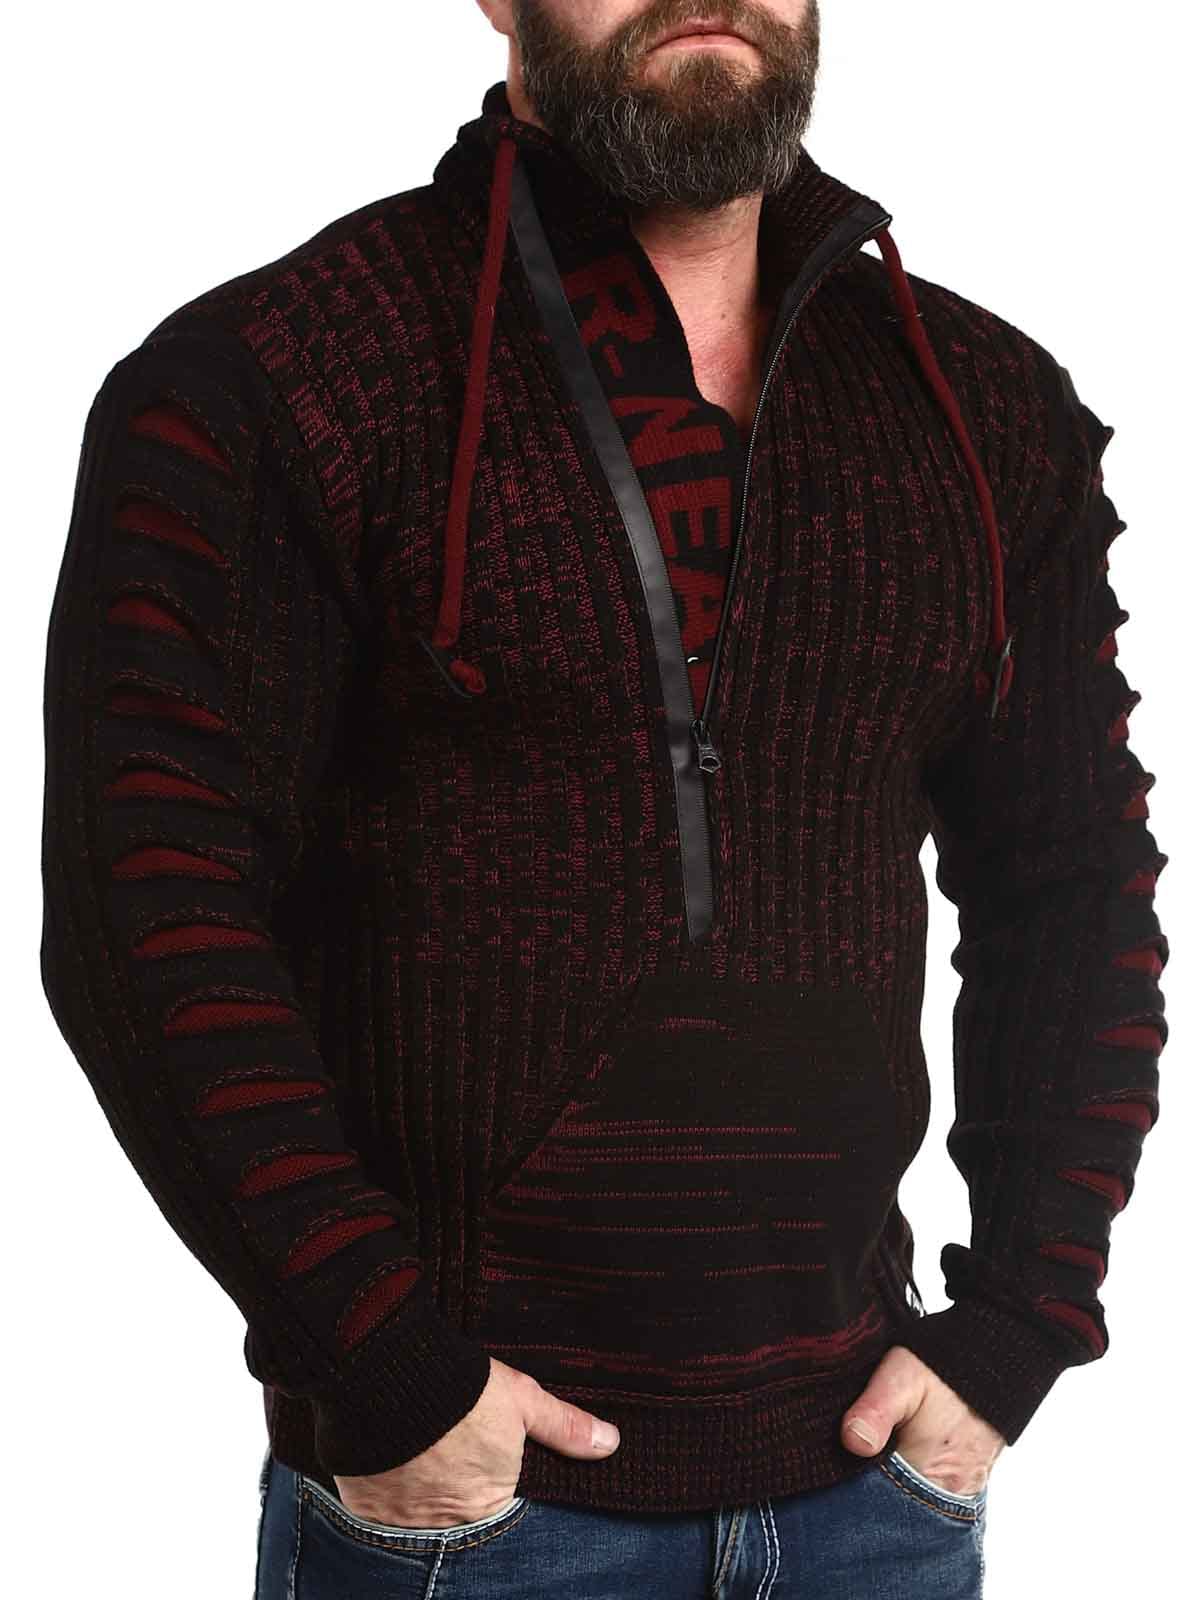 Bartoli Sweater Black WineRed_2.jpg